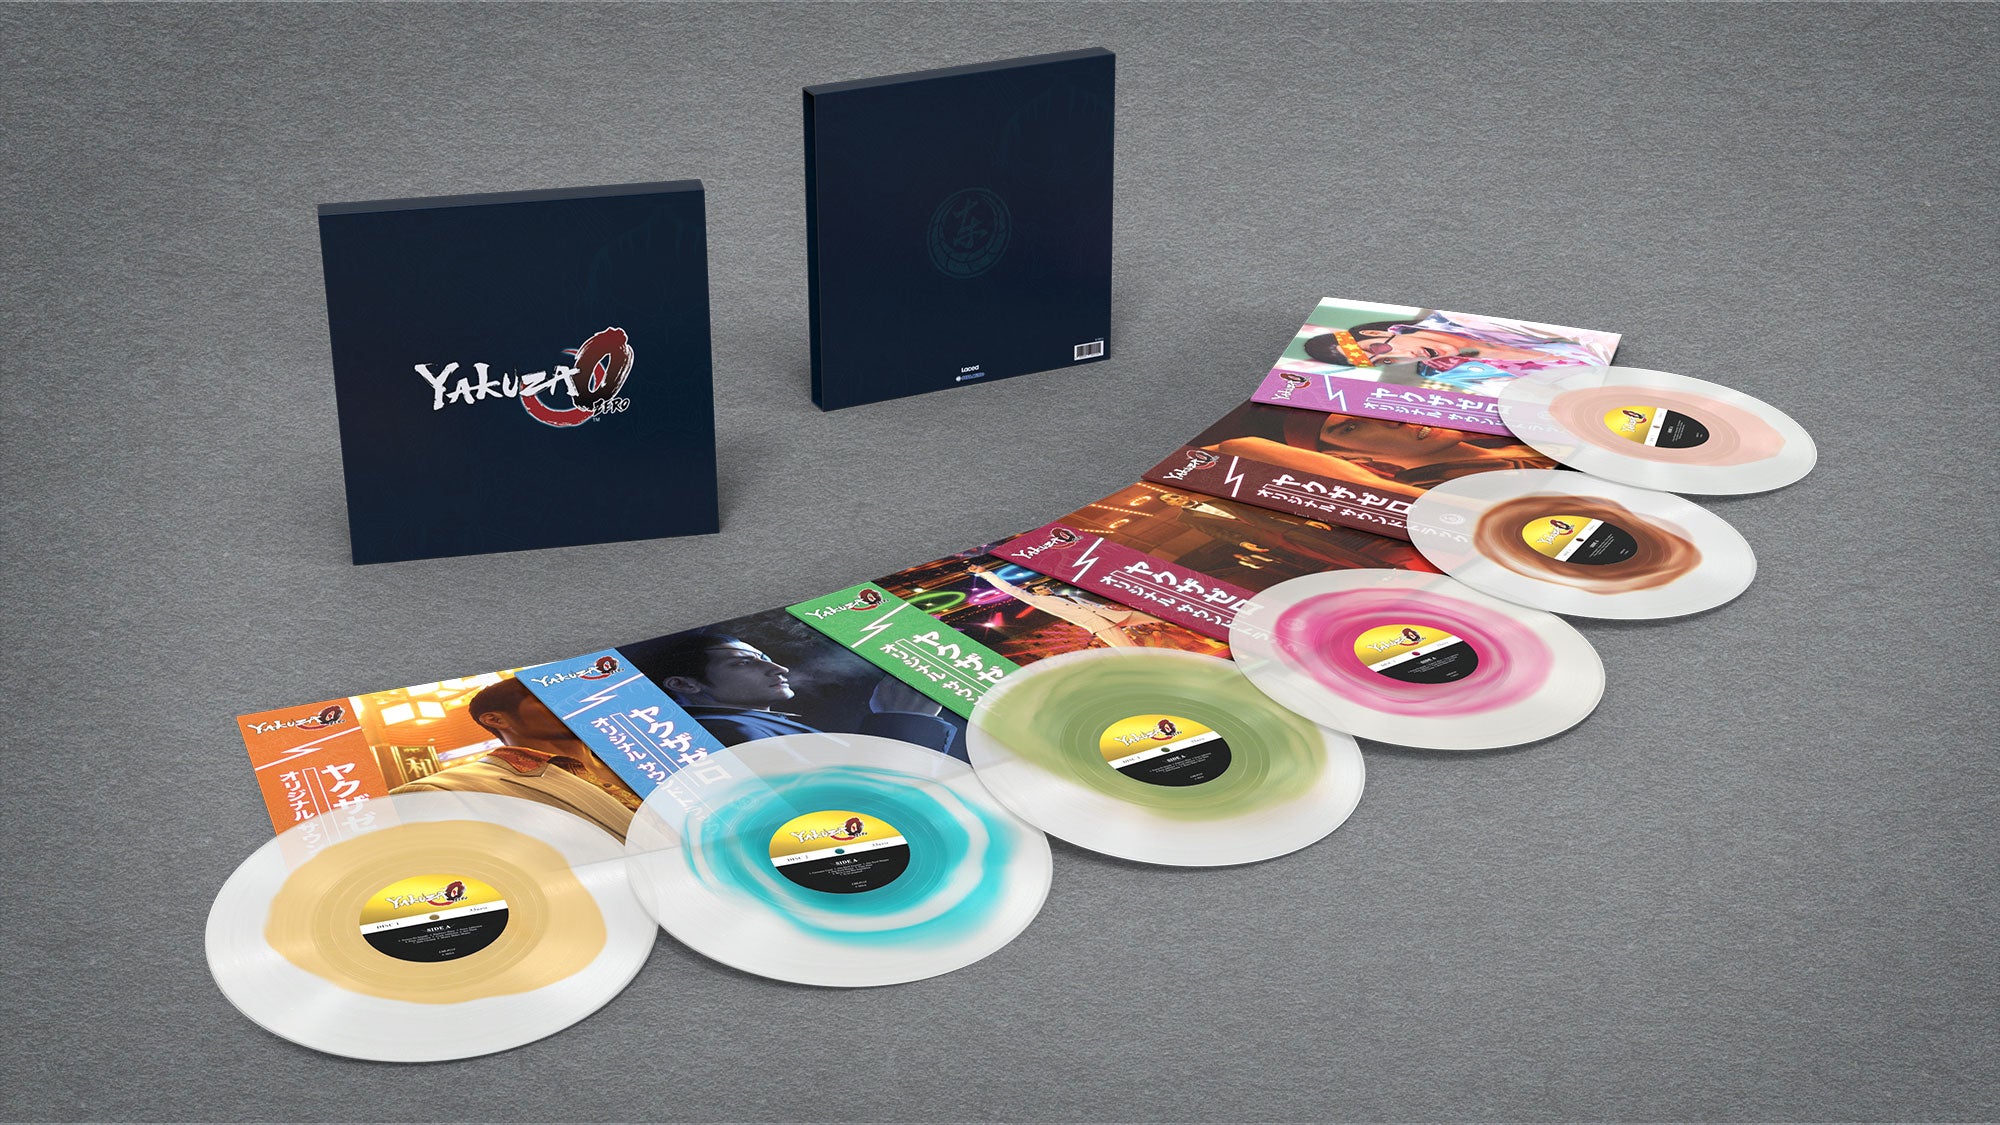 Yakuza 0 Limited Edition box set exclusive to lacedrecords.com